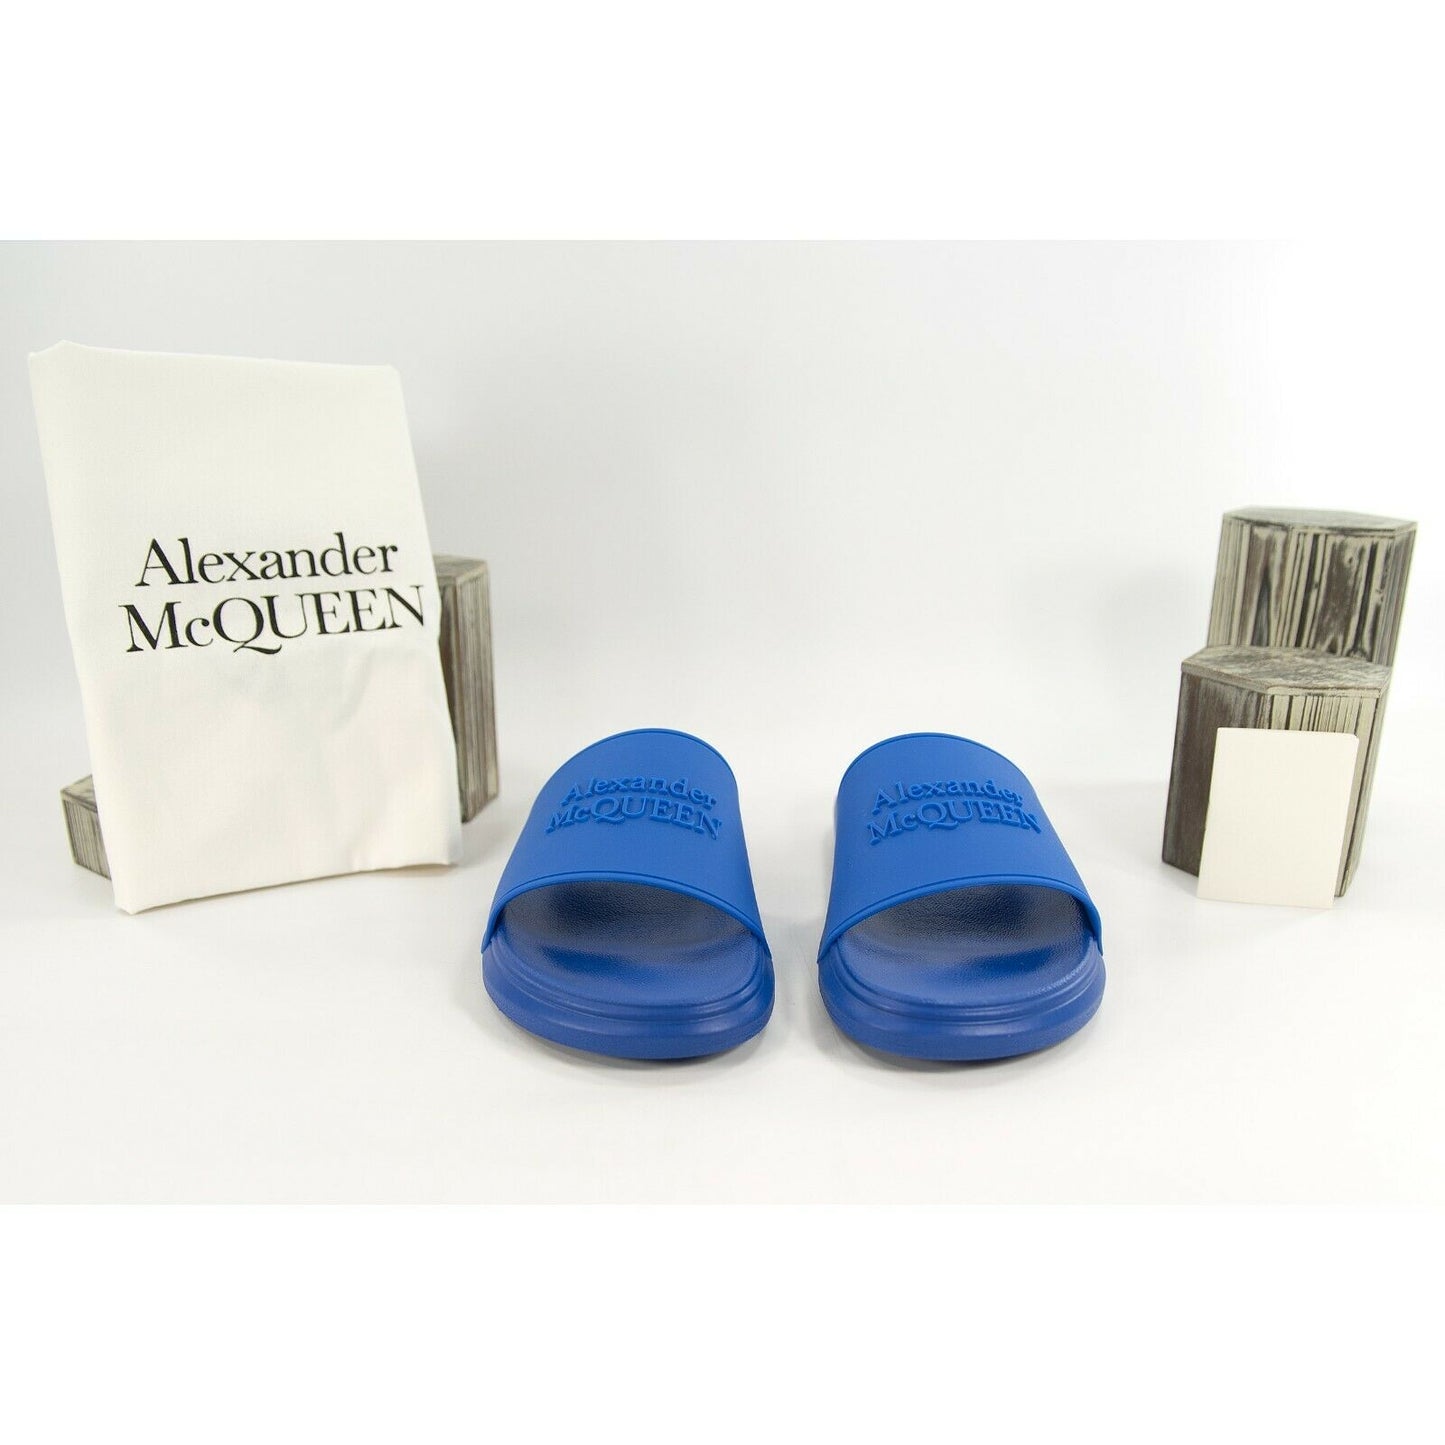 Alexander McQueen Blue Embossed Logo Leather Rubber Pool Slides 40.5 NIB